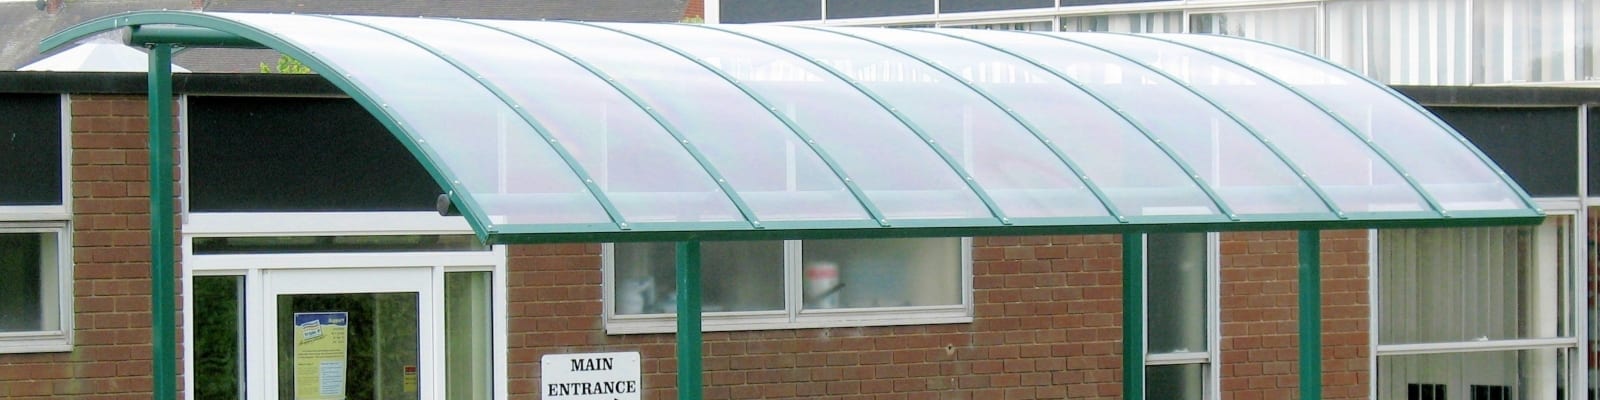 Beechgrove Junior School Curved Roof Canopy